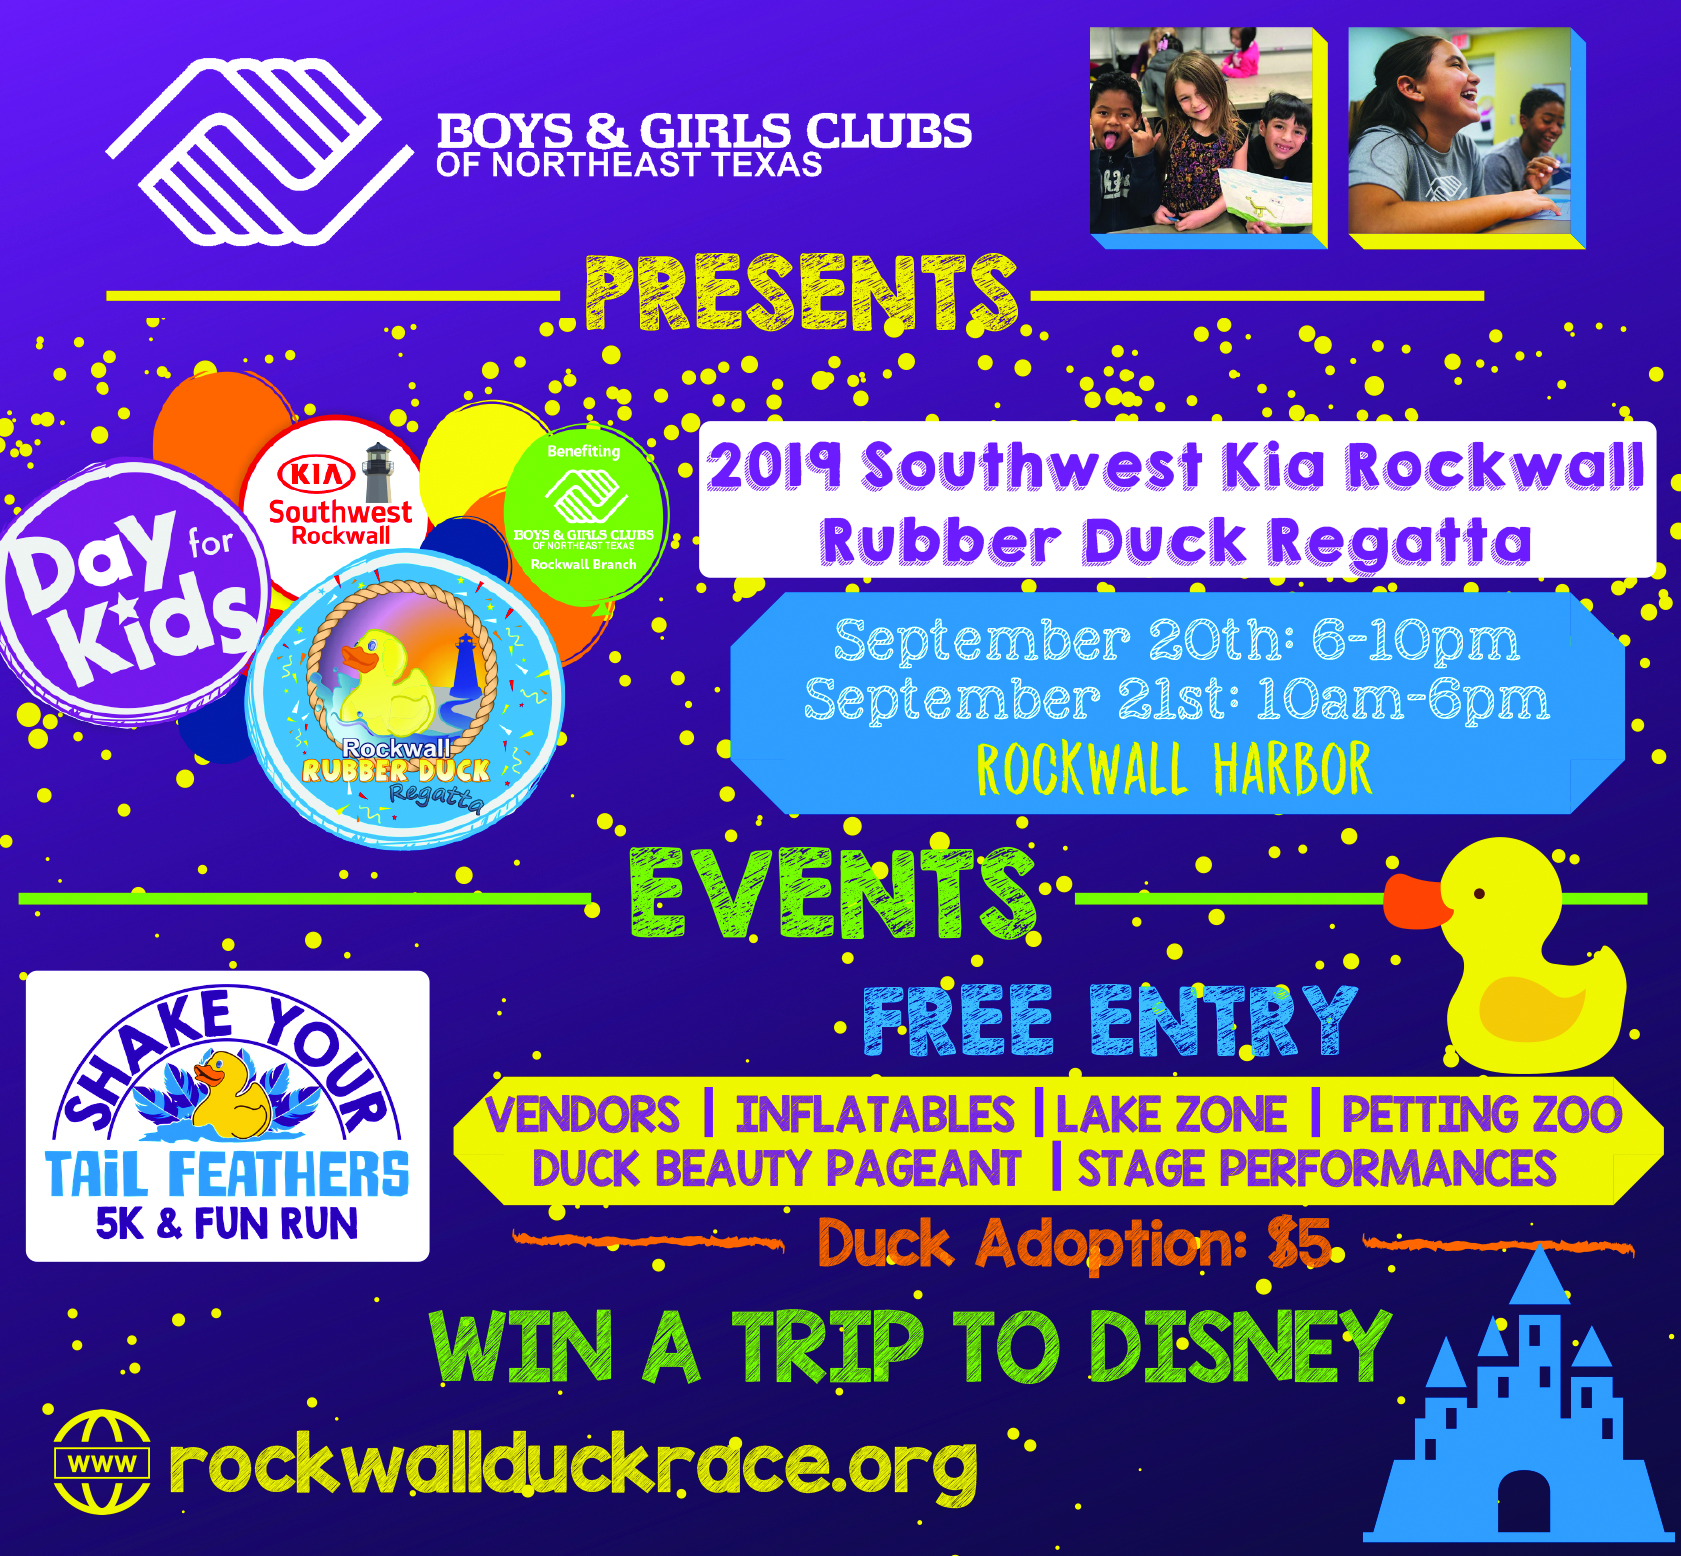 Copy of 2019 Rockwall Rubber Duck Regatta Post Card